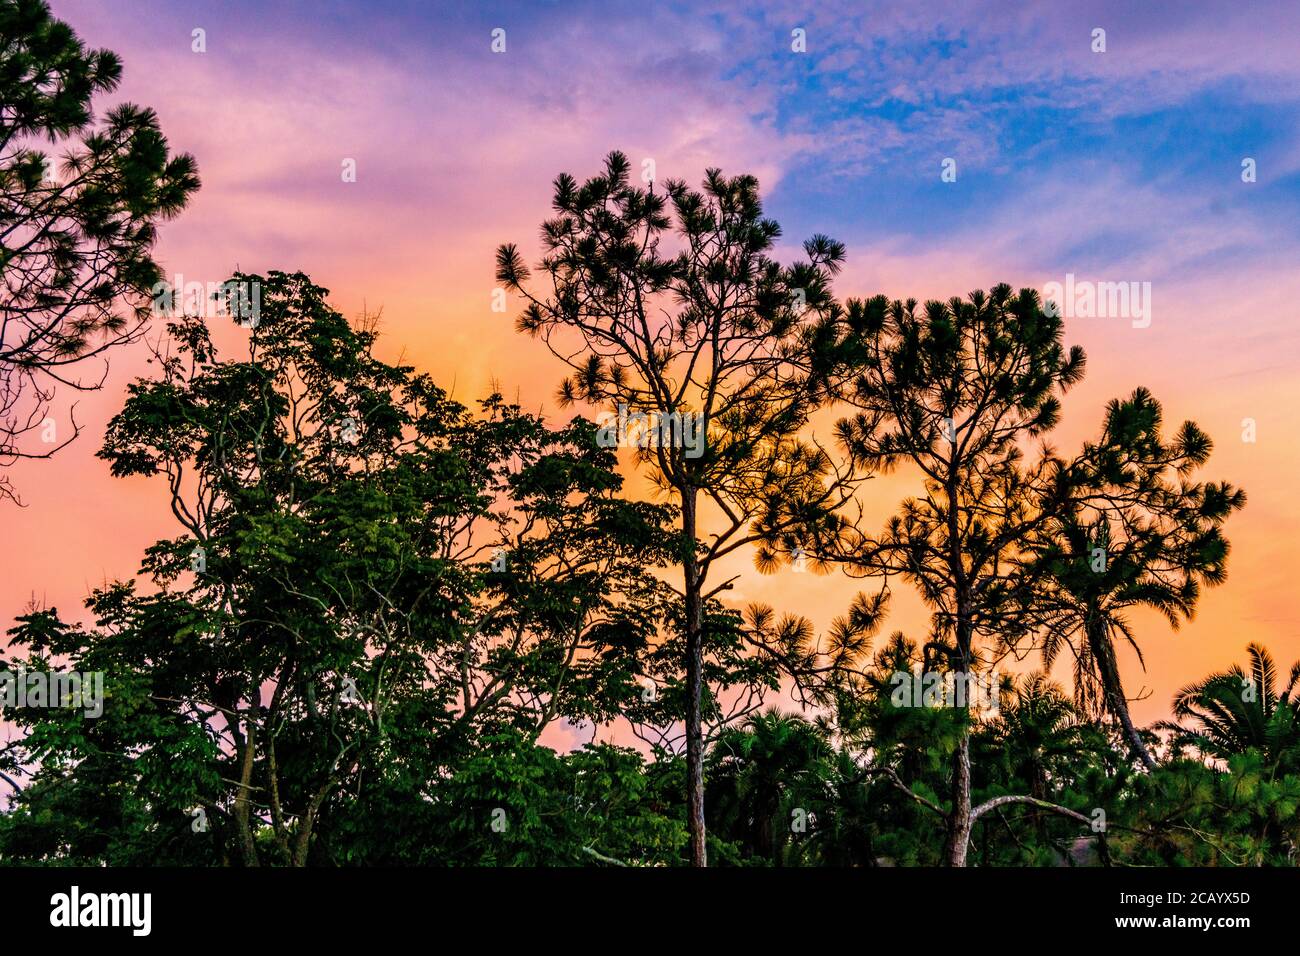 Sarasota, USA, 9. August 2020. Bäume vor einem bunten Himmel bei Sonnenuntergang in den Meadows, Sarasota, Florida. Kredit: Enrique Shore/Alamy Stock Foto Stockfoto